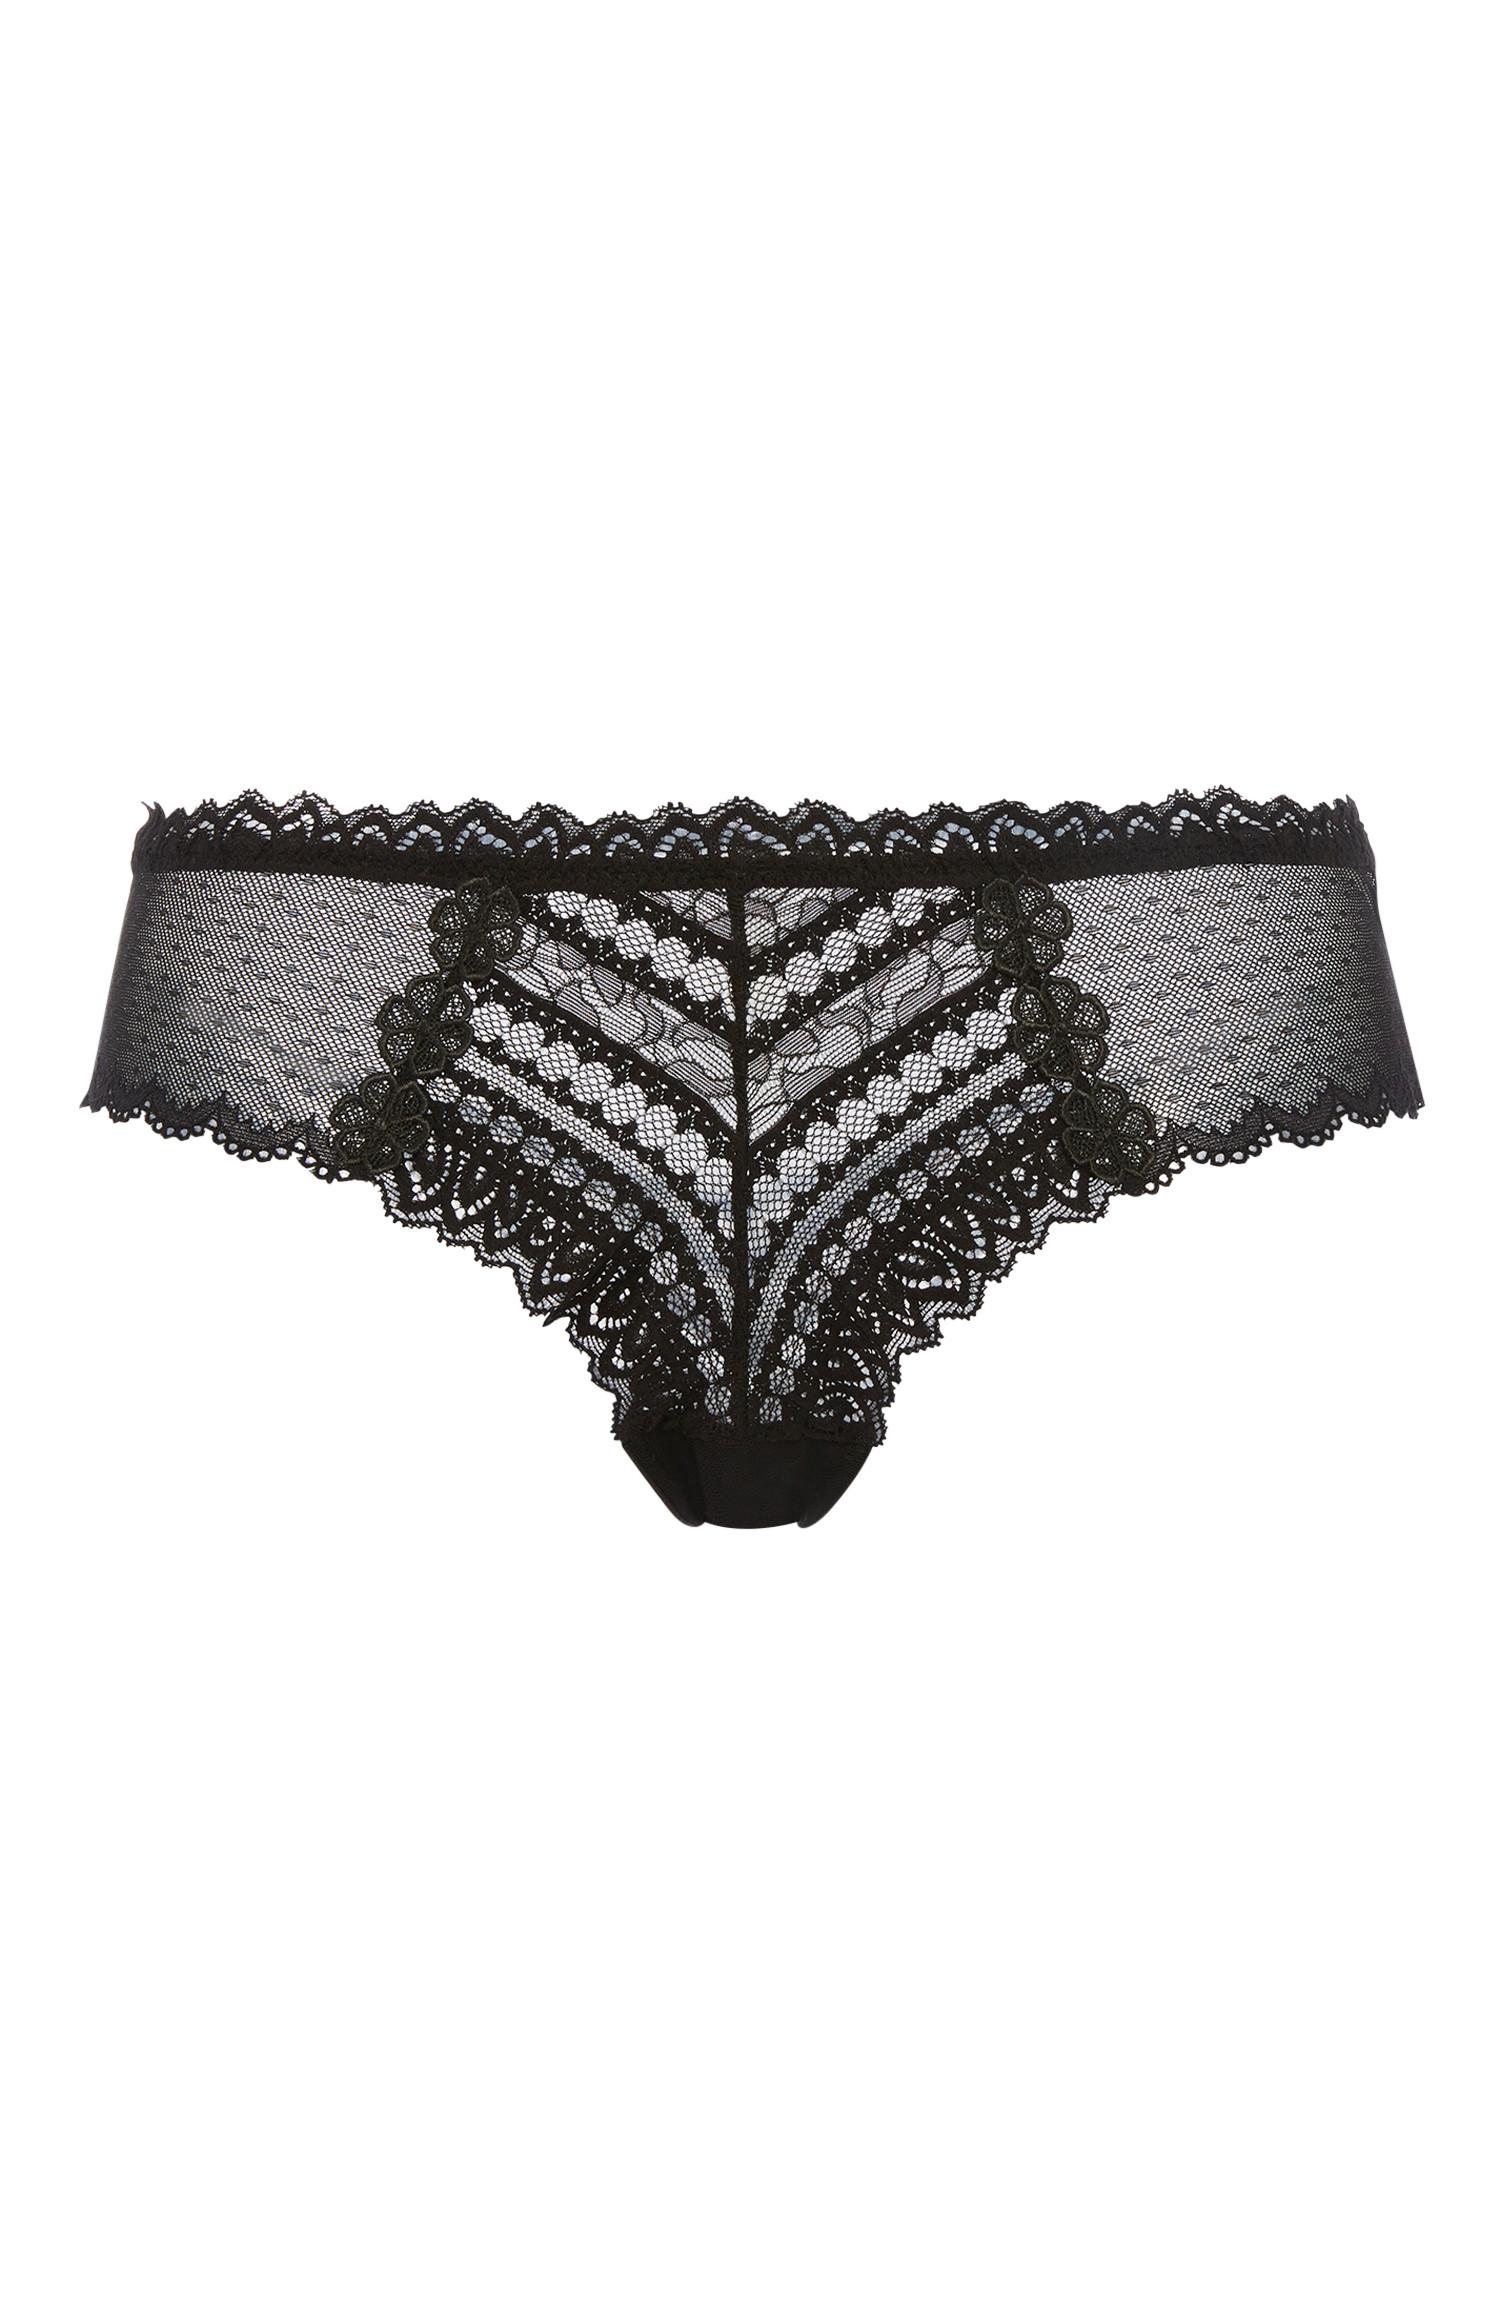 Black Lace Brief | Coordinates | Lingerie & Underwear | Womens ...